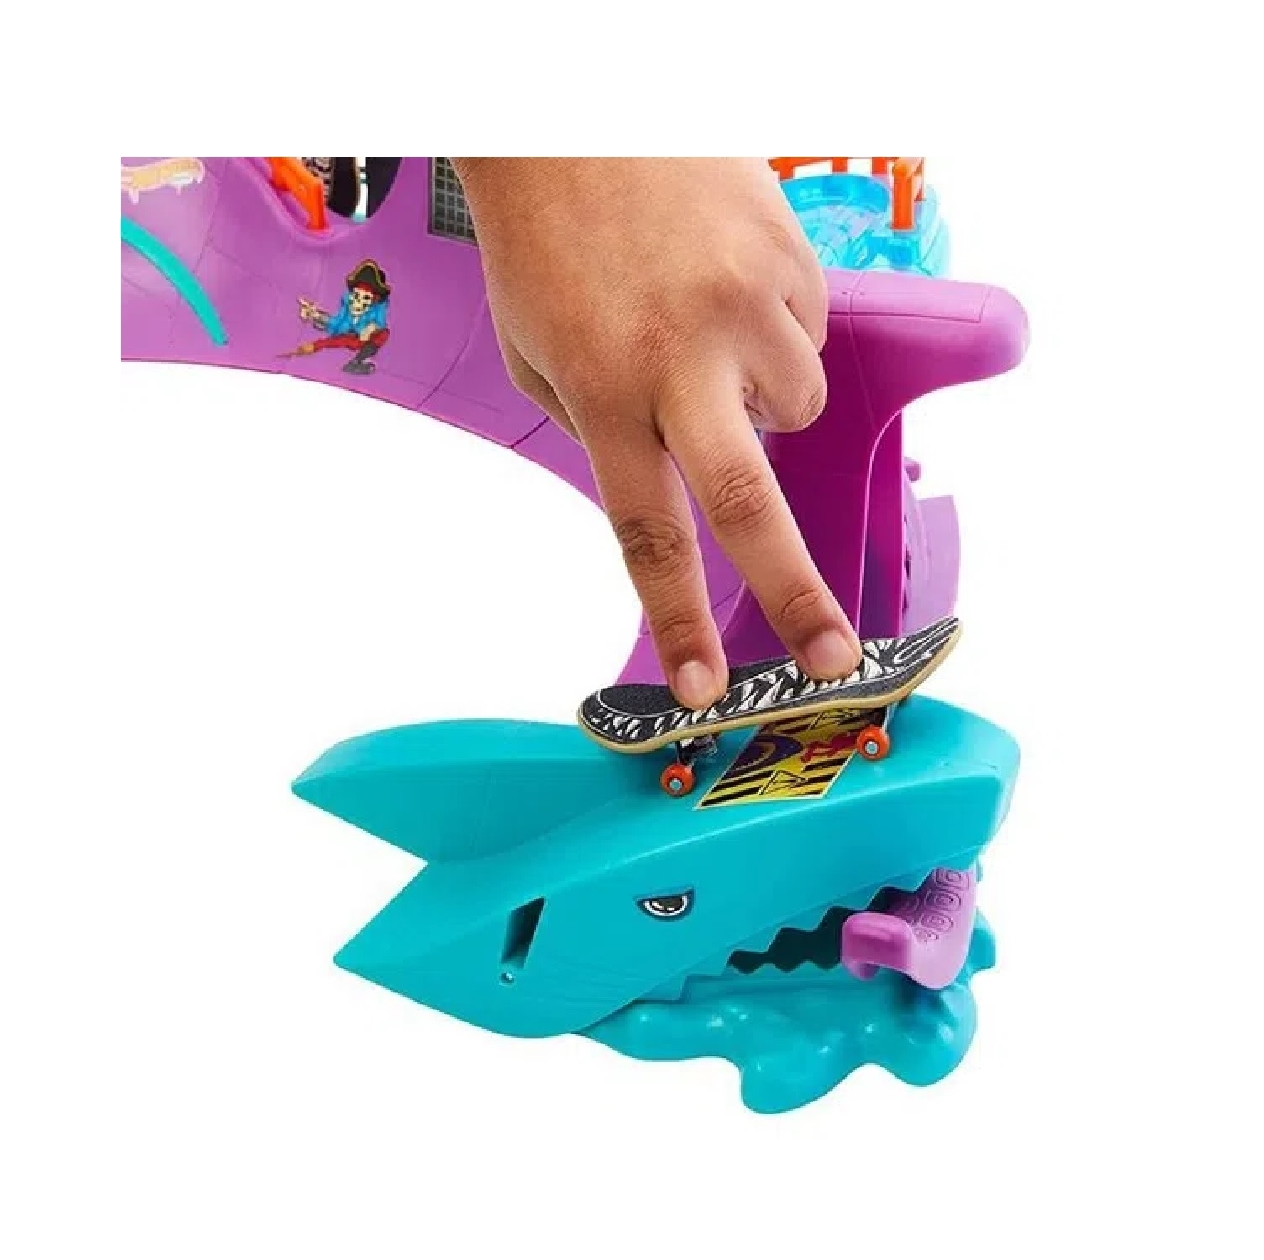 Conjunto Pista E Acessórios - Hot Wheels - Skate - Mattel